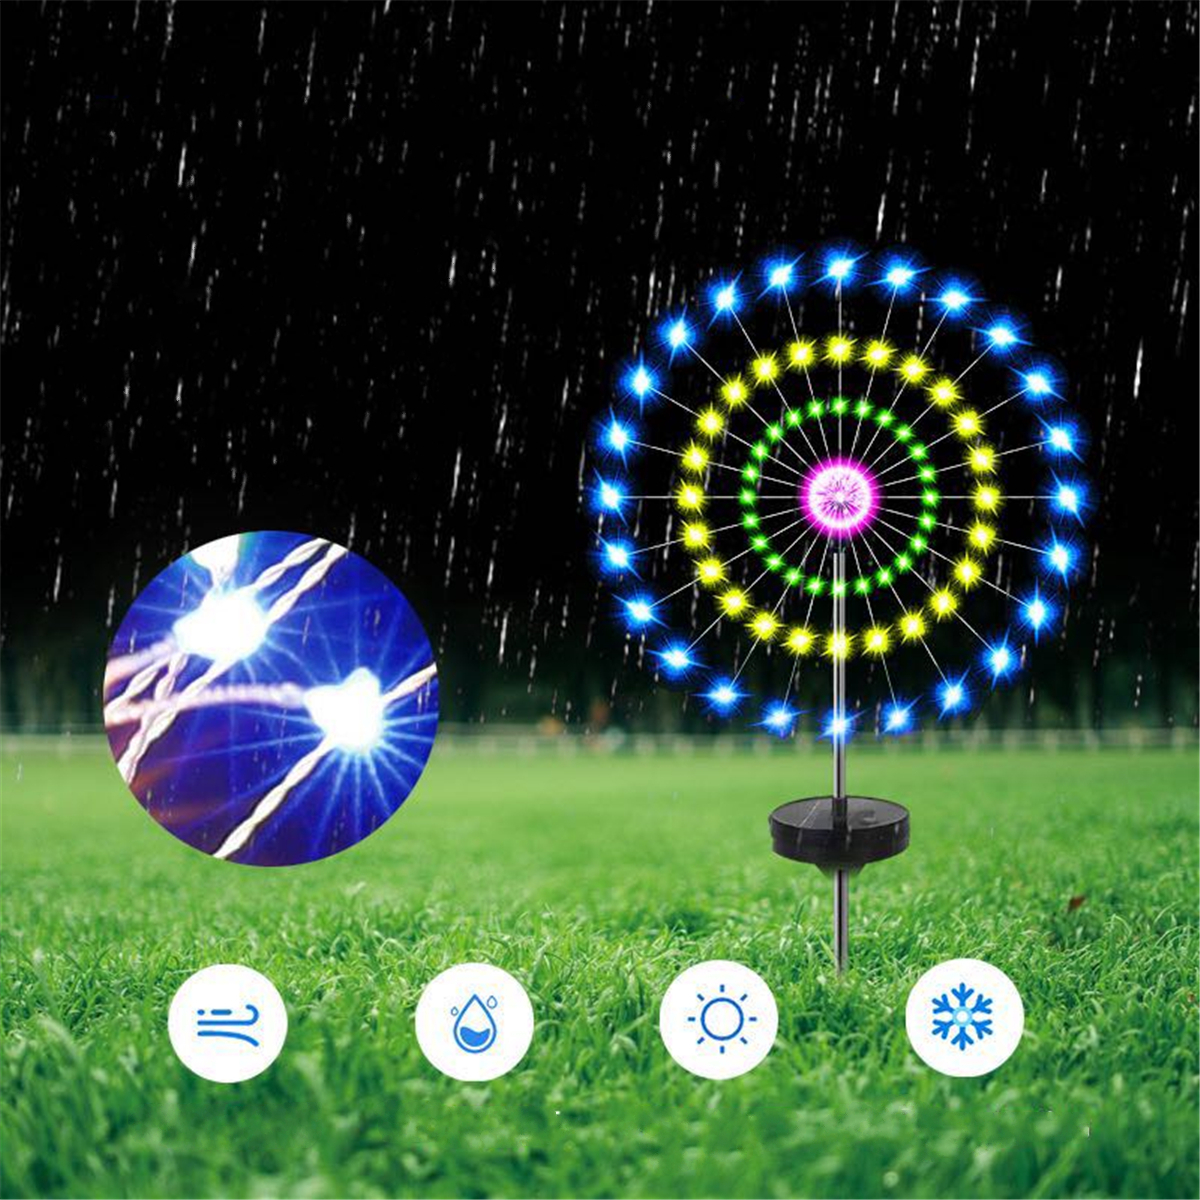 

Solar Powered Colorful LED Starburst String Light Lawn Lamp for Christmas Garden Party Decor